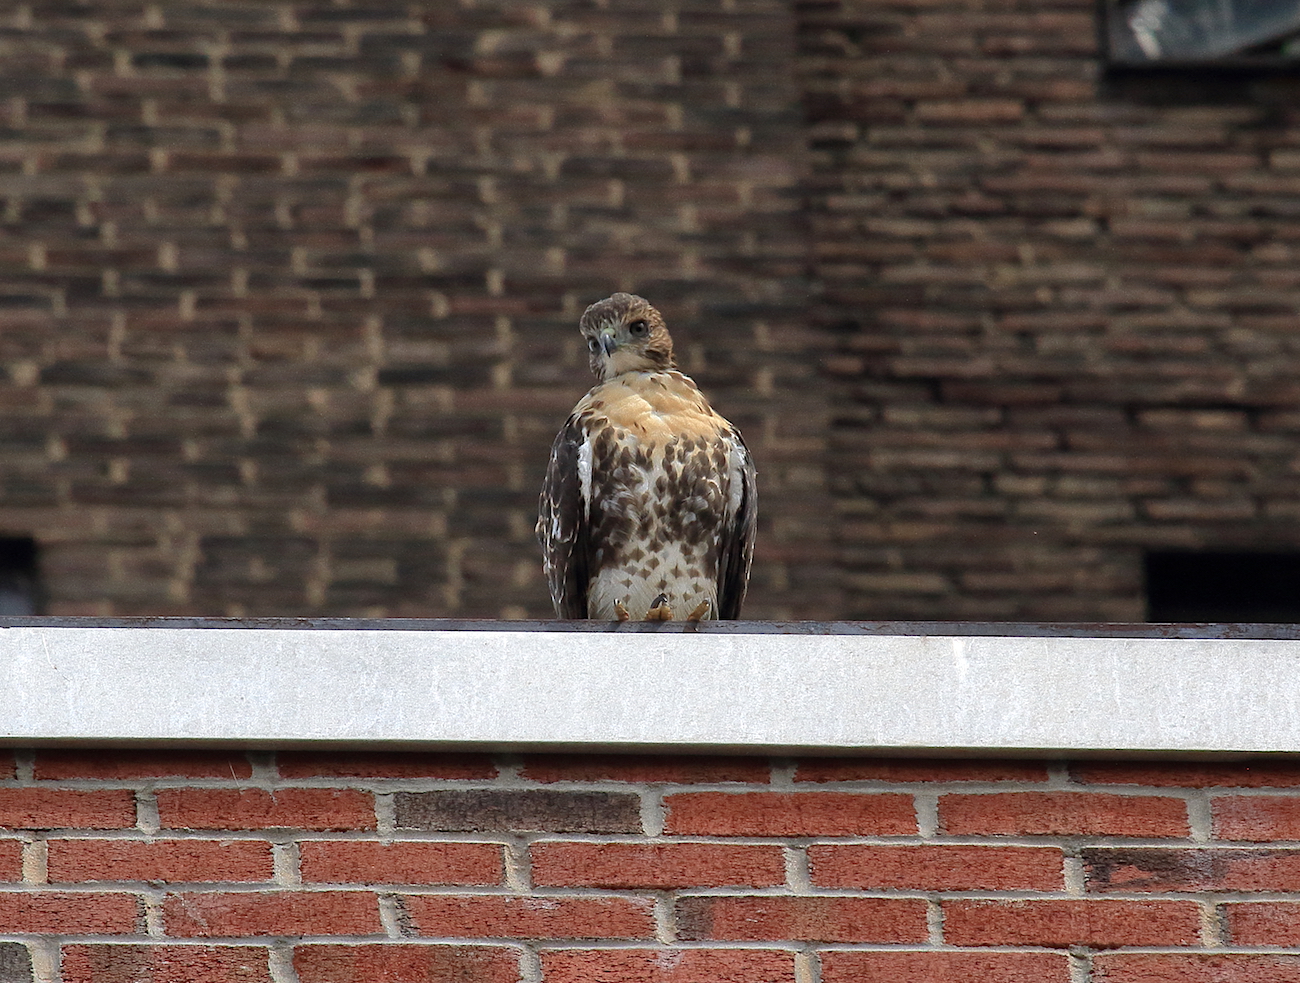 Red-tailed Hawk fledgling sitting on NYU building, Washington Square Park (NYC)